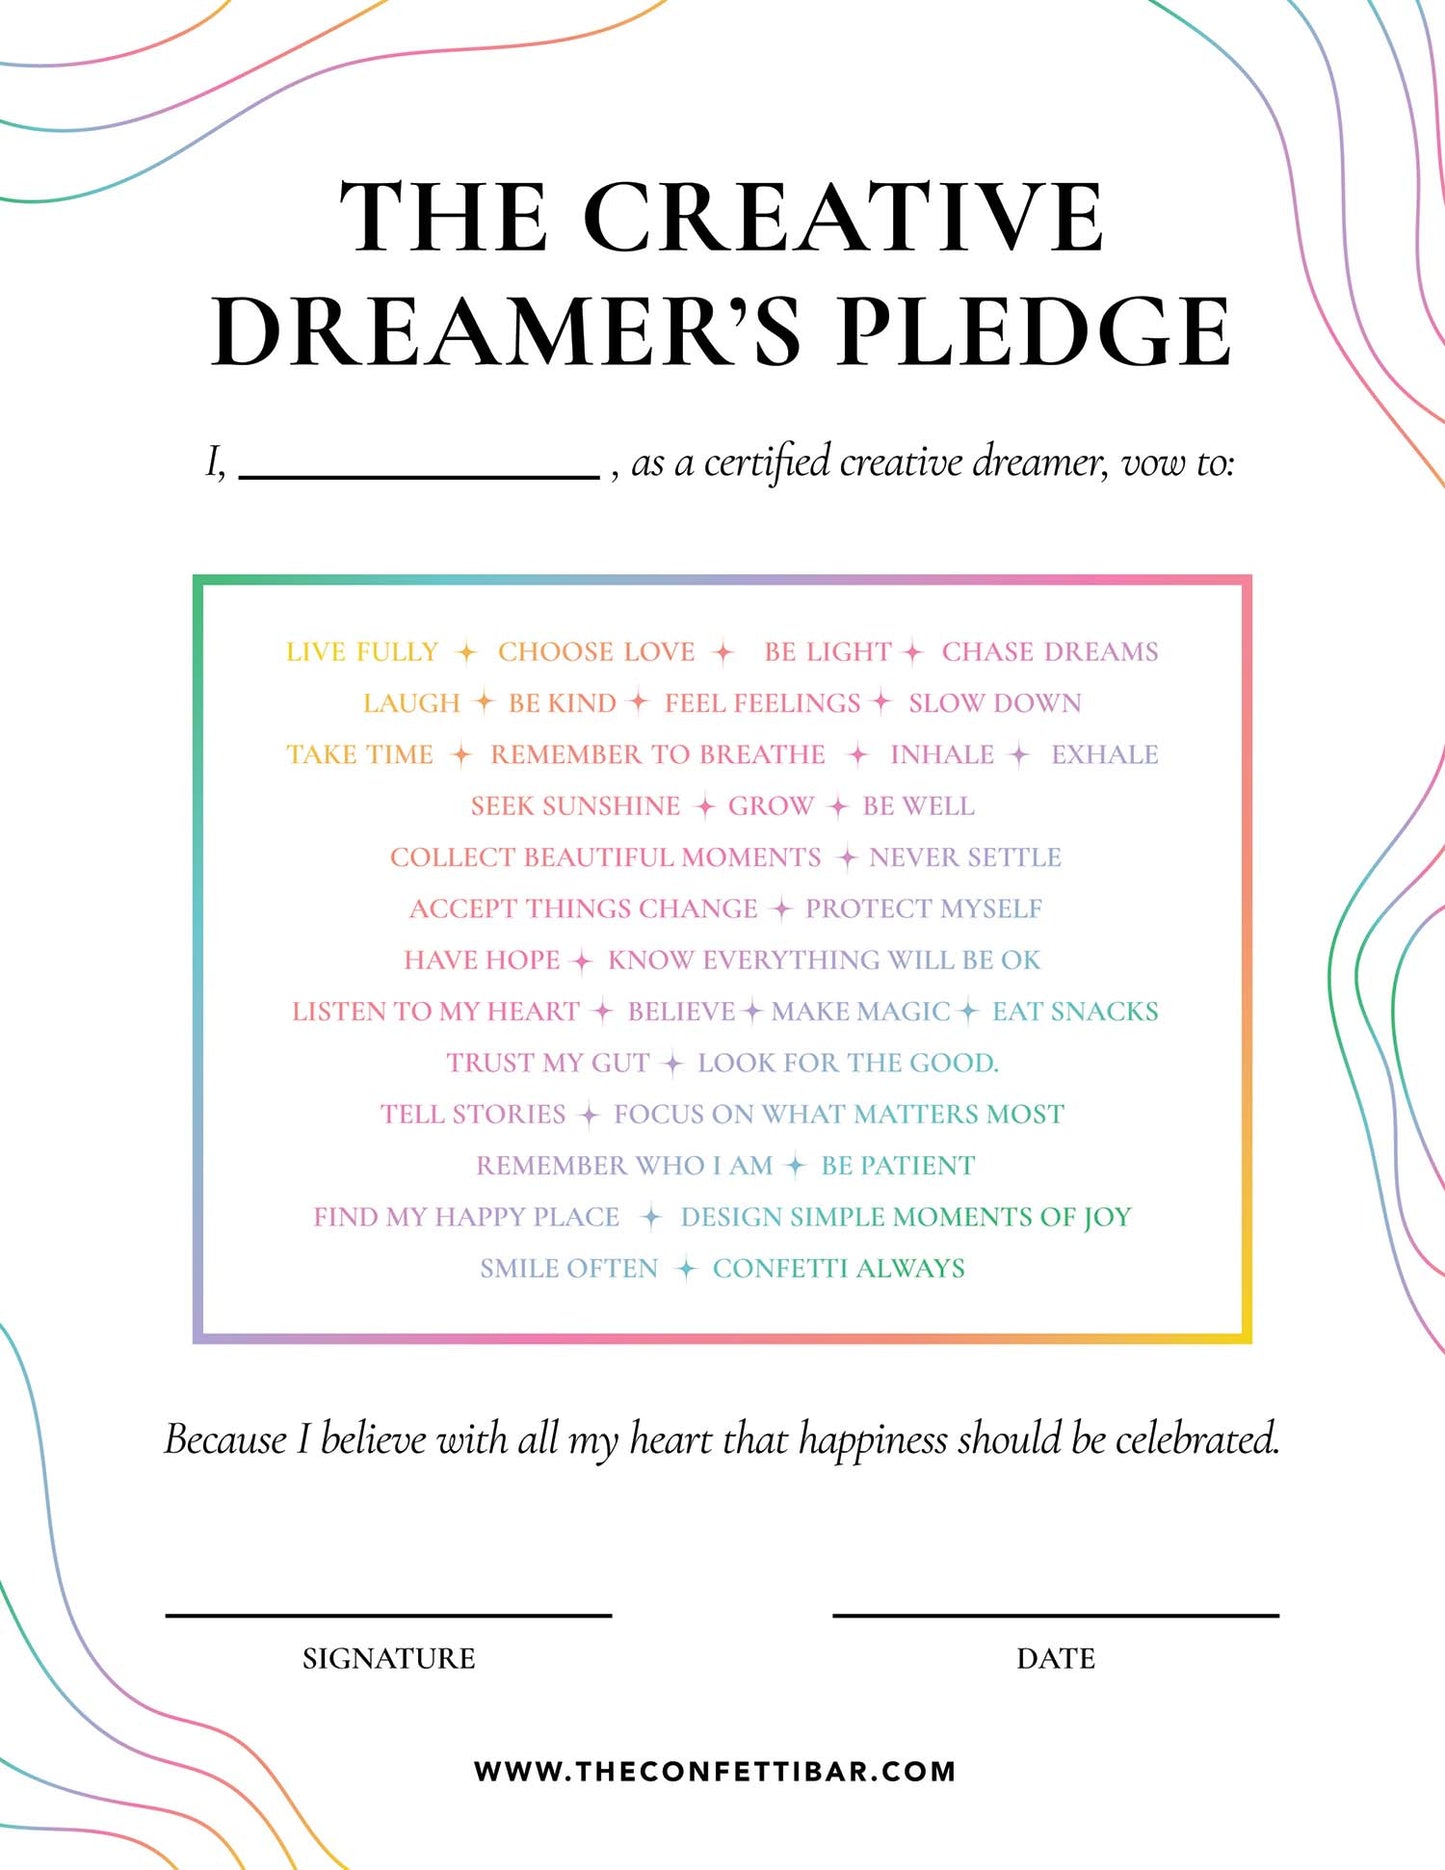 The Creative Dreamer's Pledge